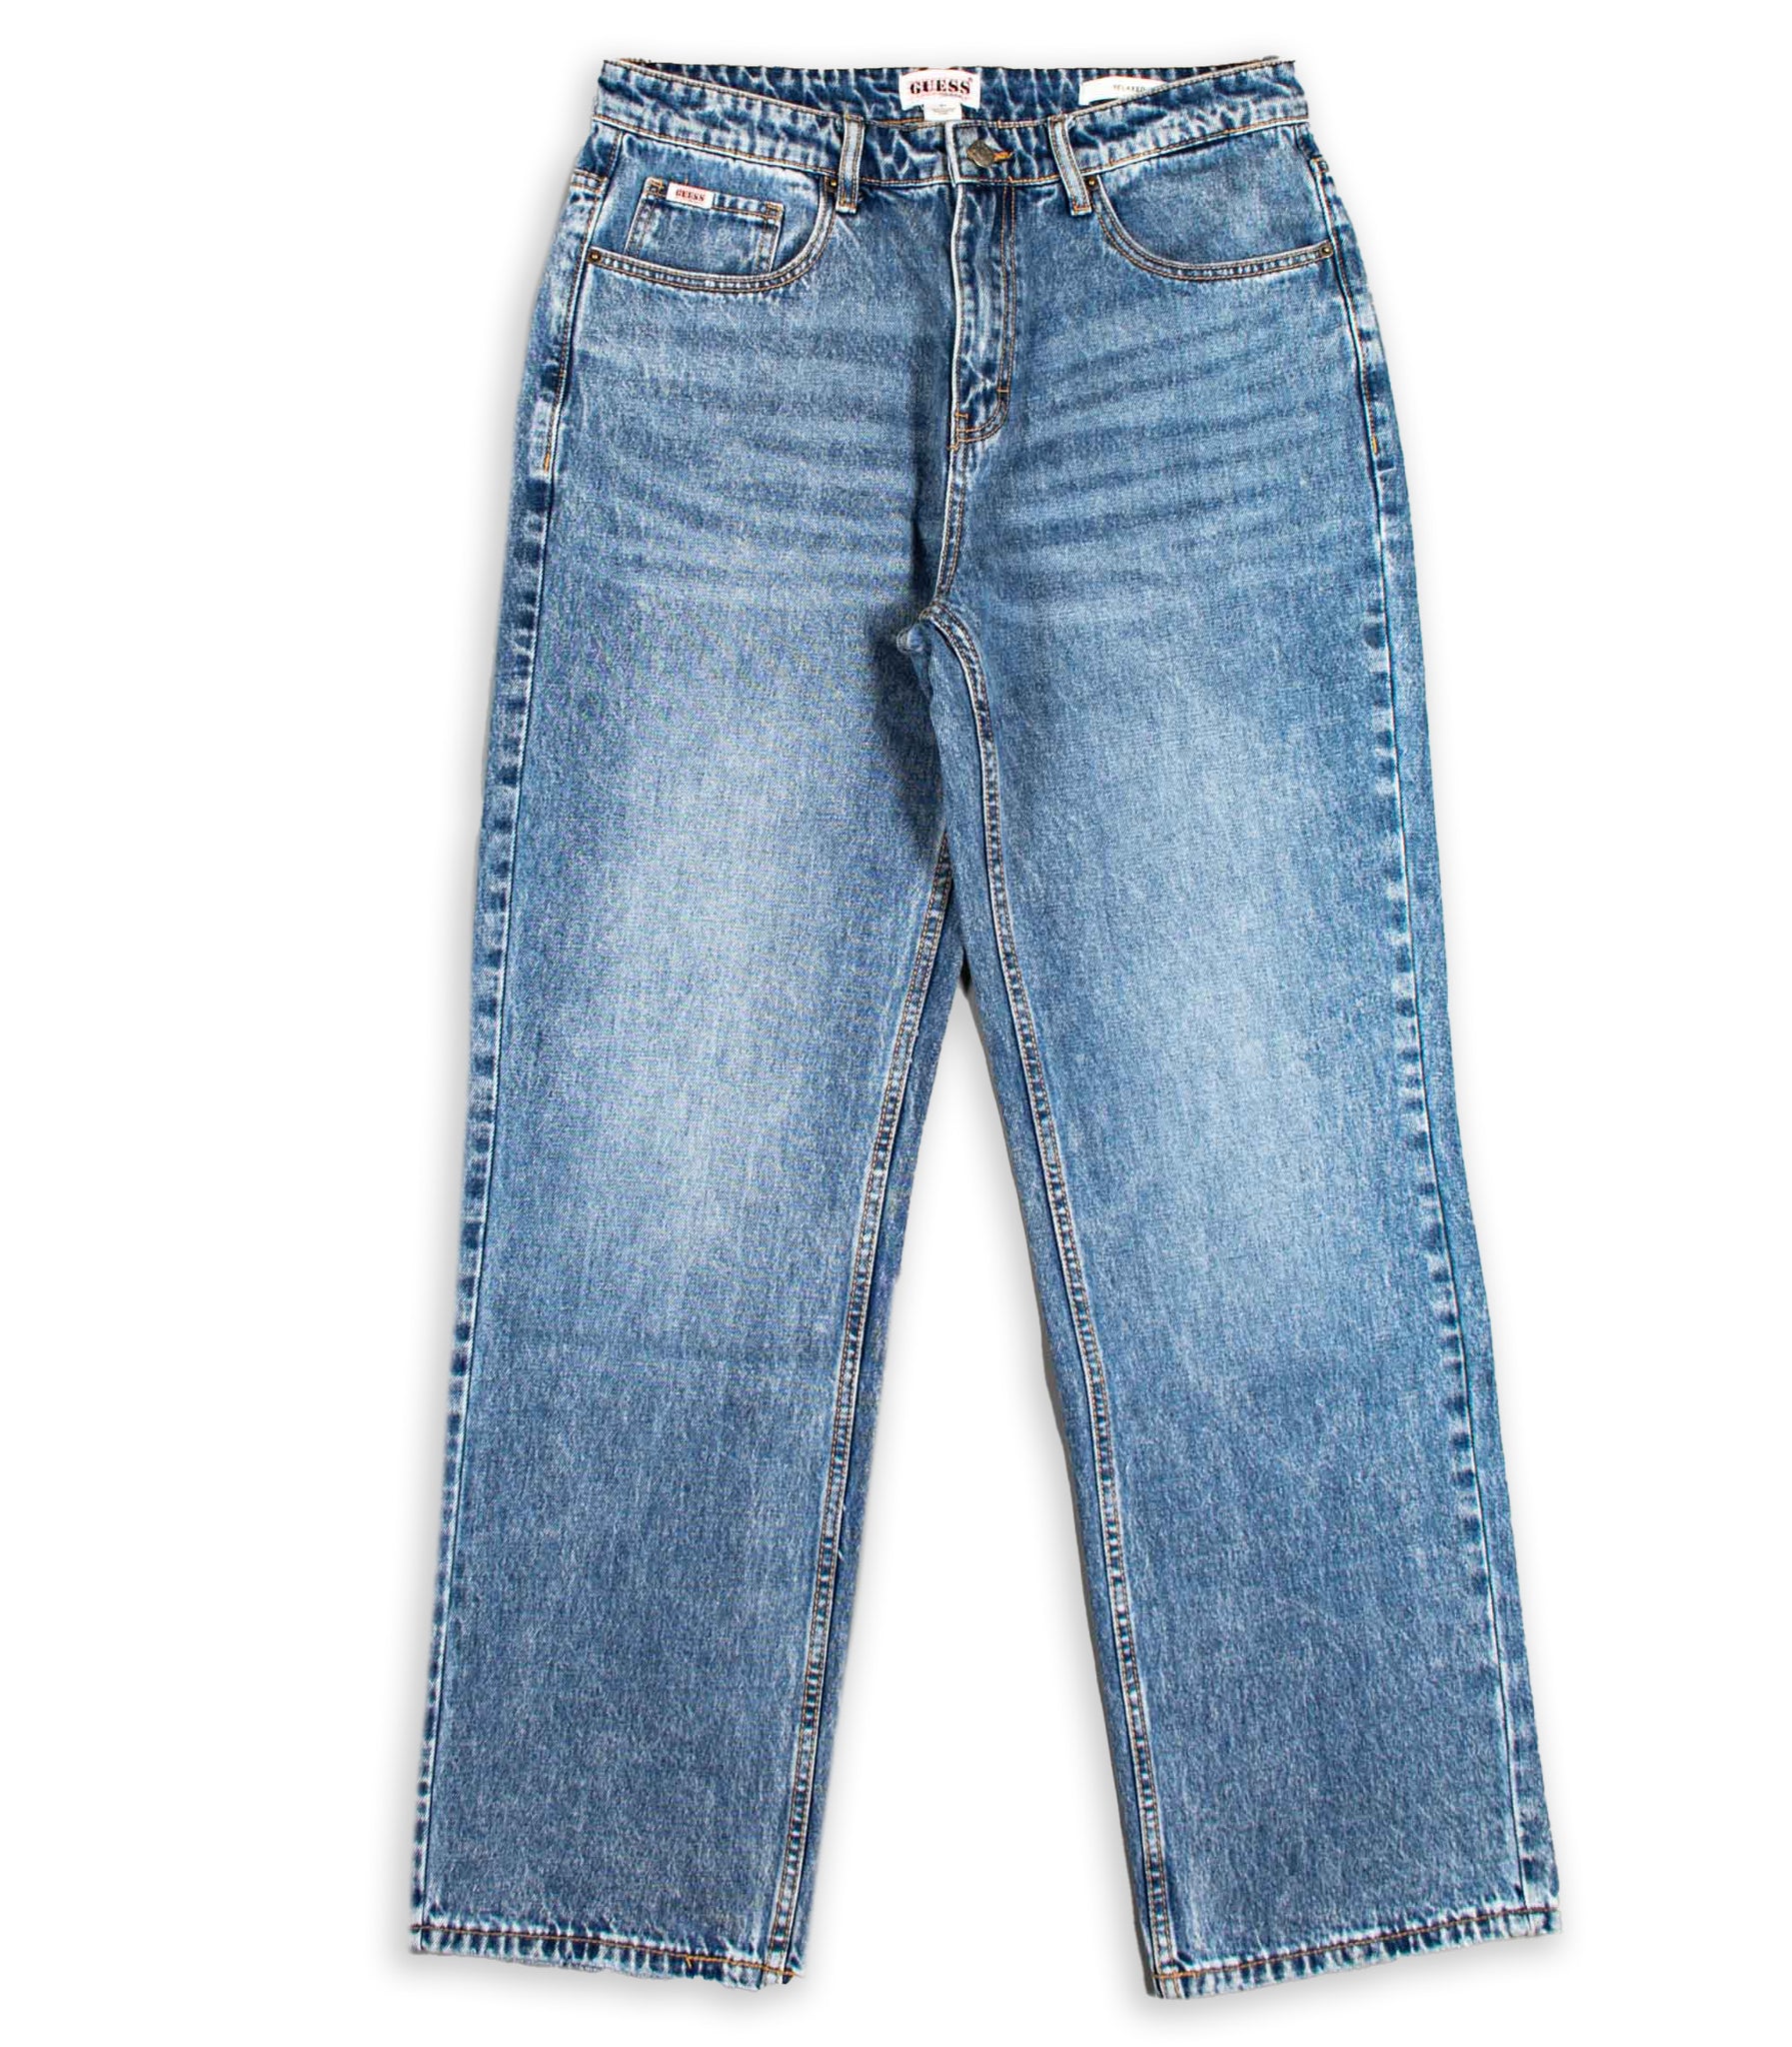 Guess Kit Stright Pants A71r Blue Men's Jeans